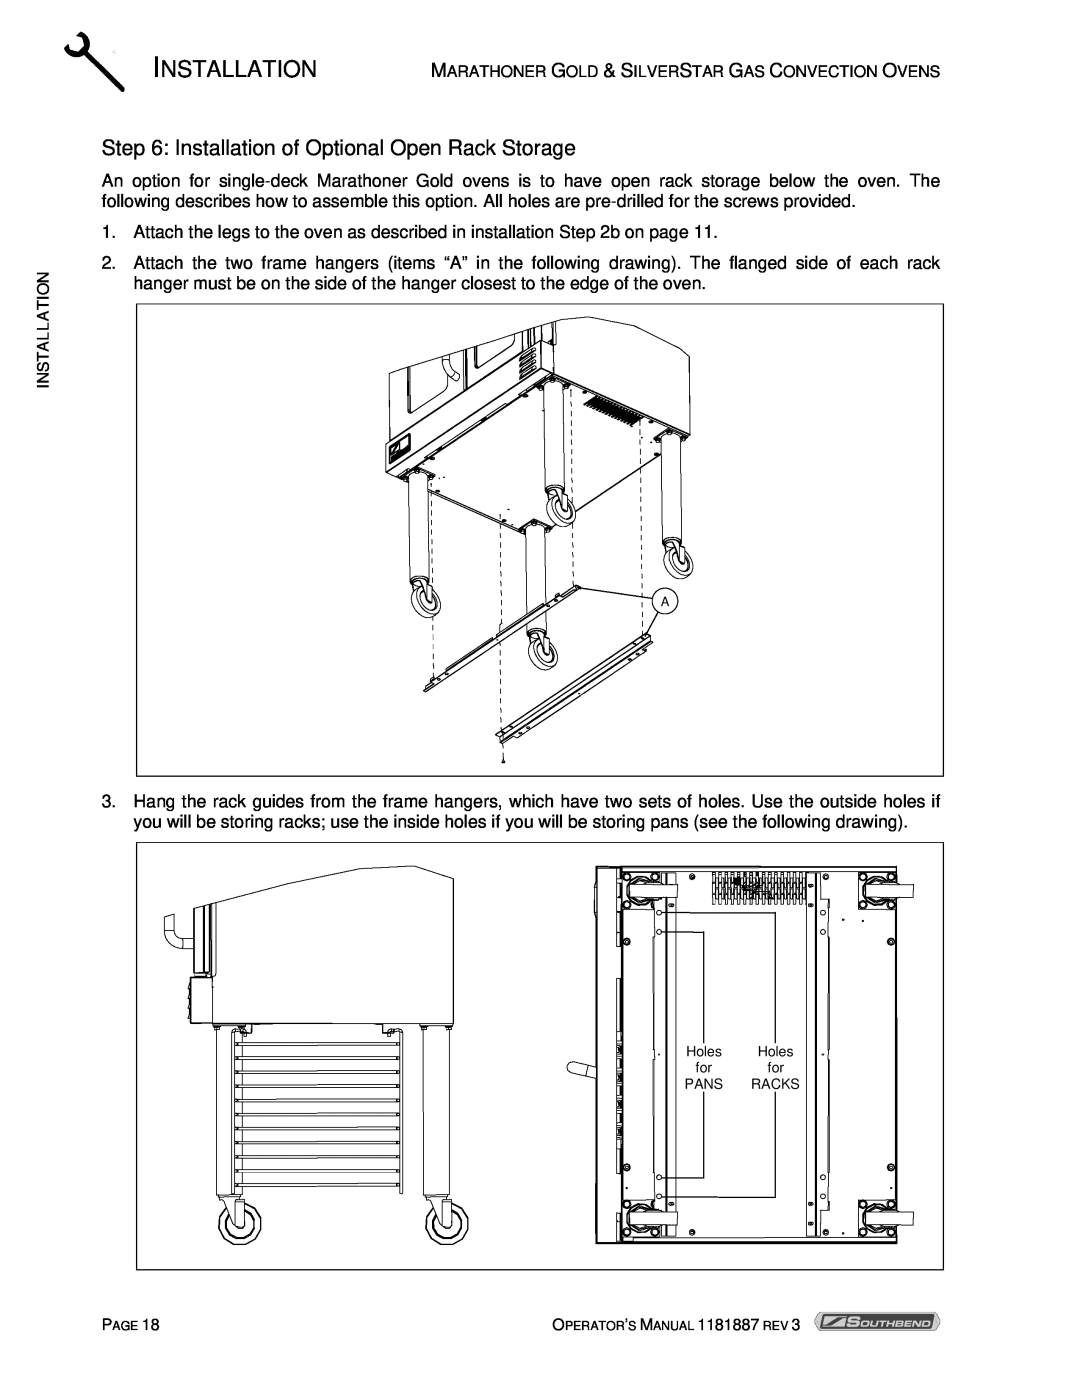 Southbend Marathoner manual Installation of Optional Open Rack Storage 